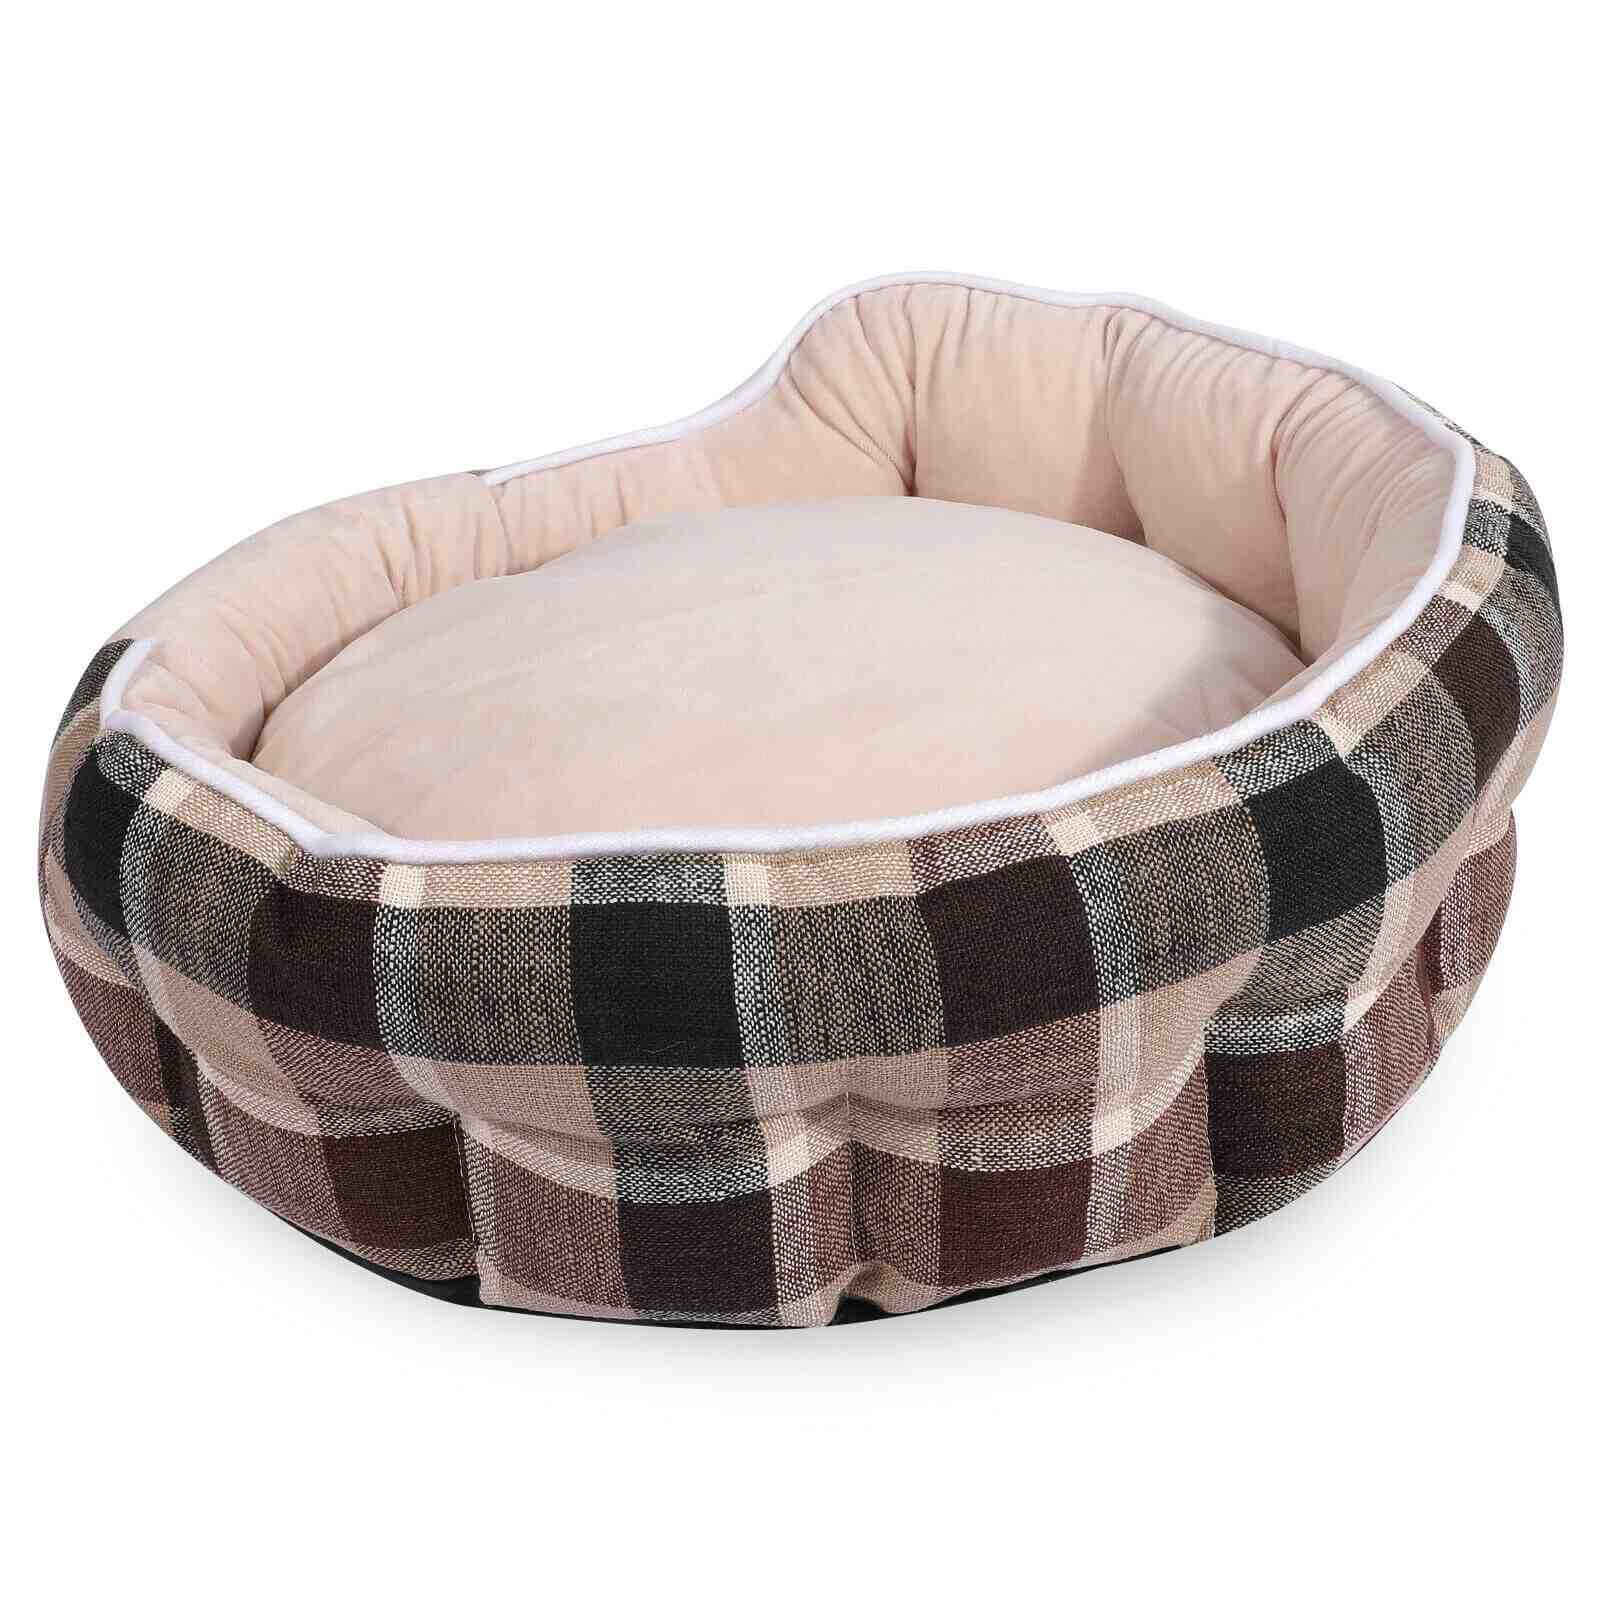 Detail of Washable Soft Plush Pet Dog Cat Bed